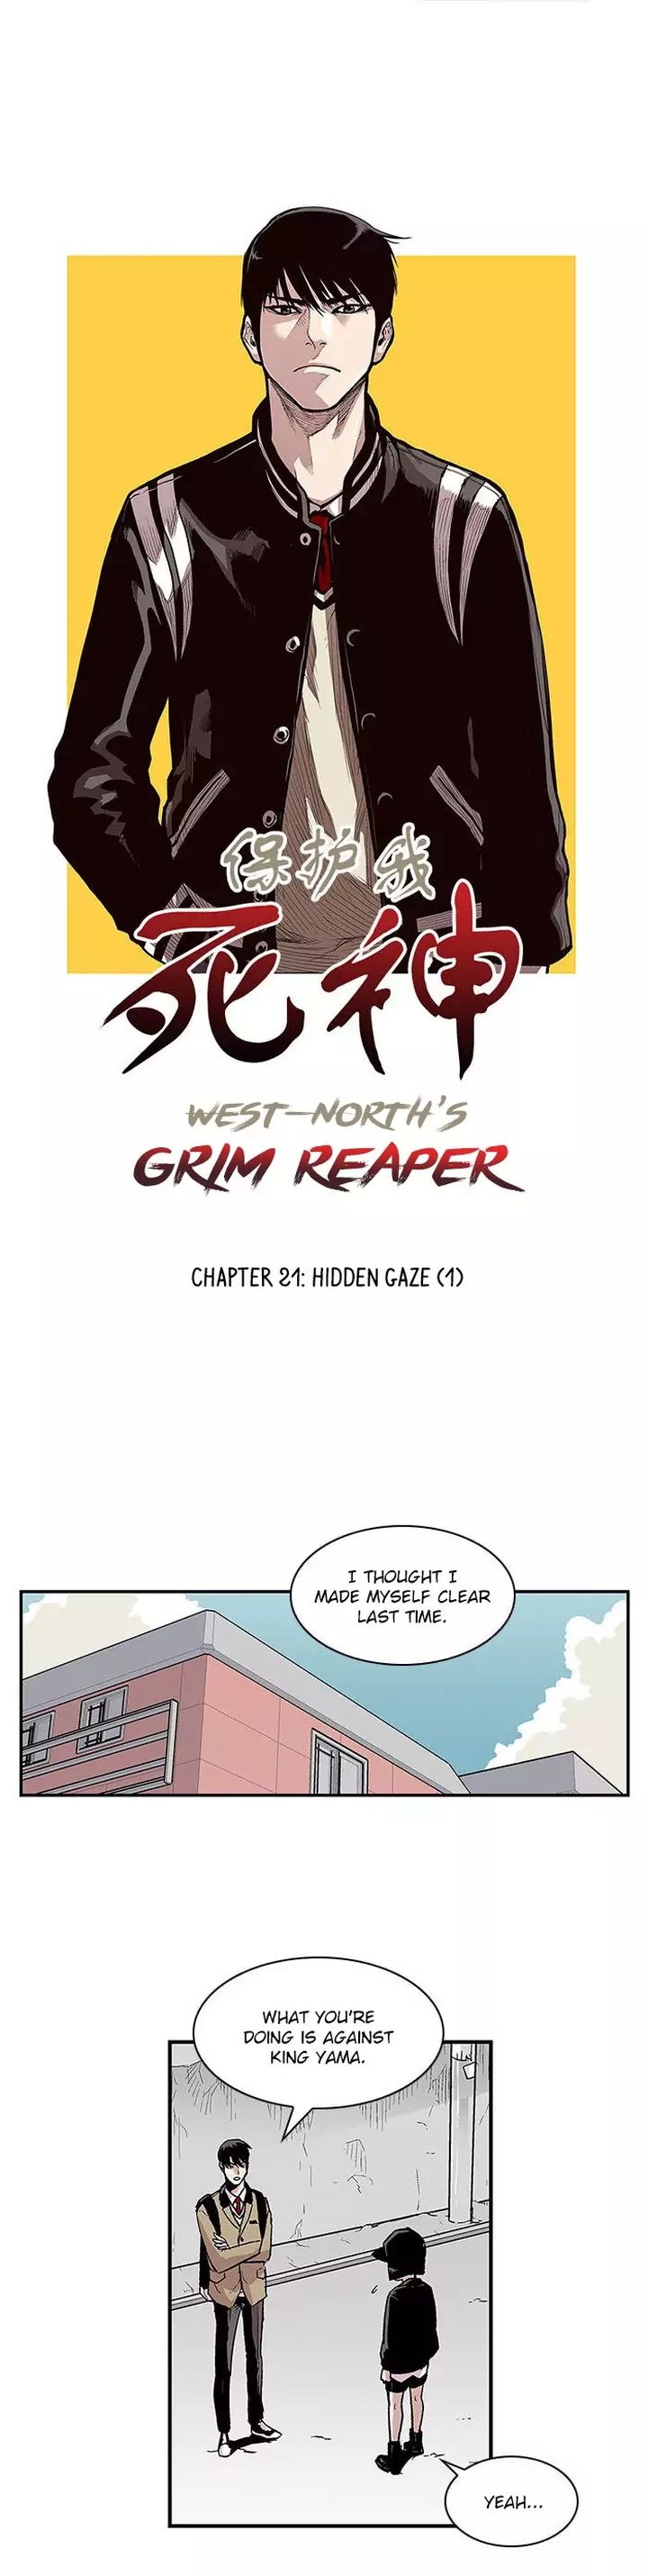 West Norths Grim Reaper 21 1